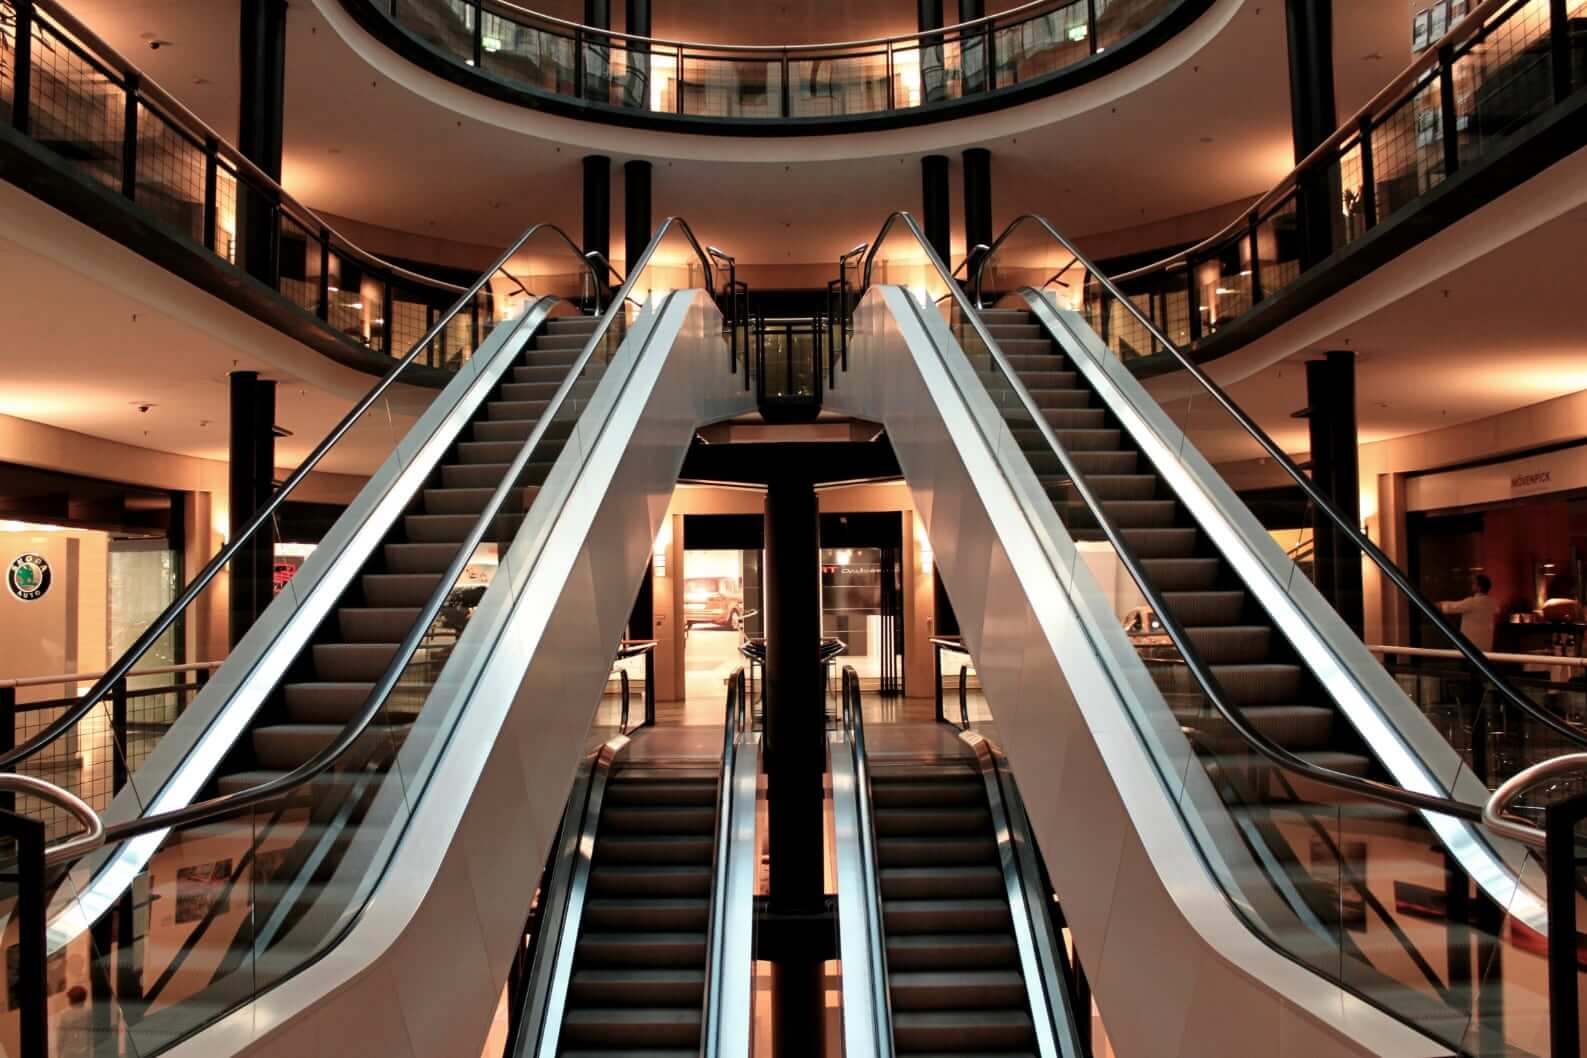 Symmetrical, ominous escalators in an empty mall.